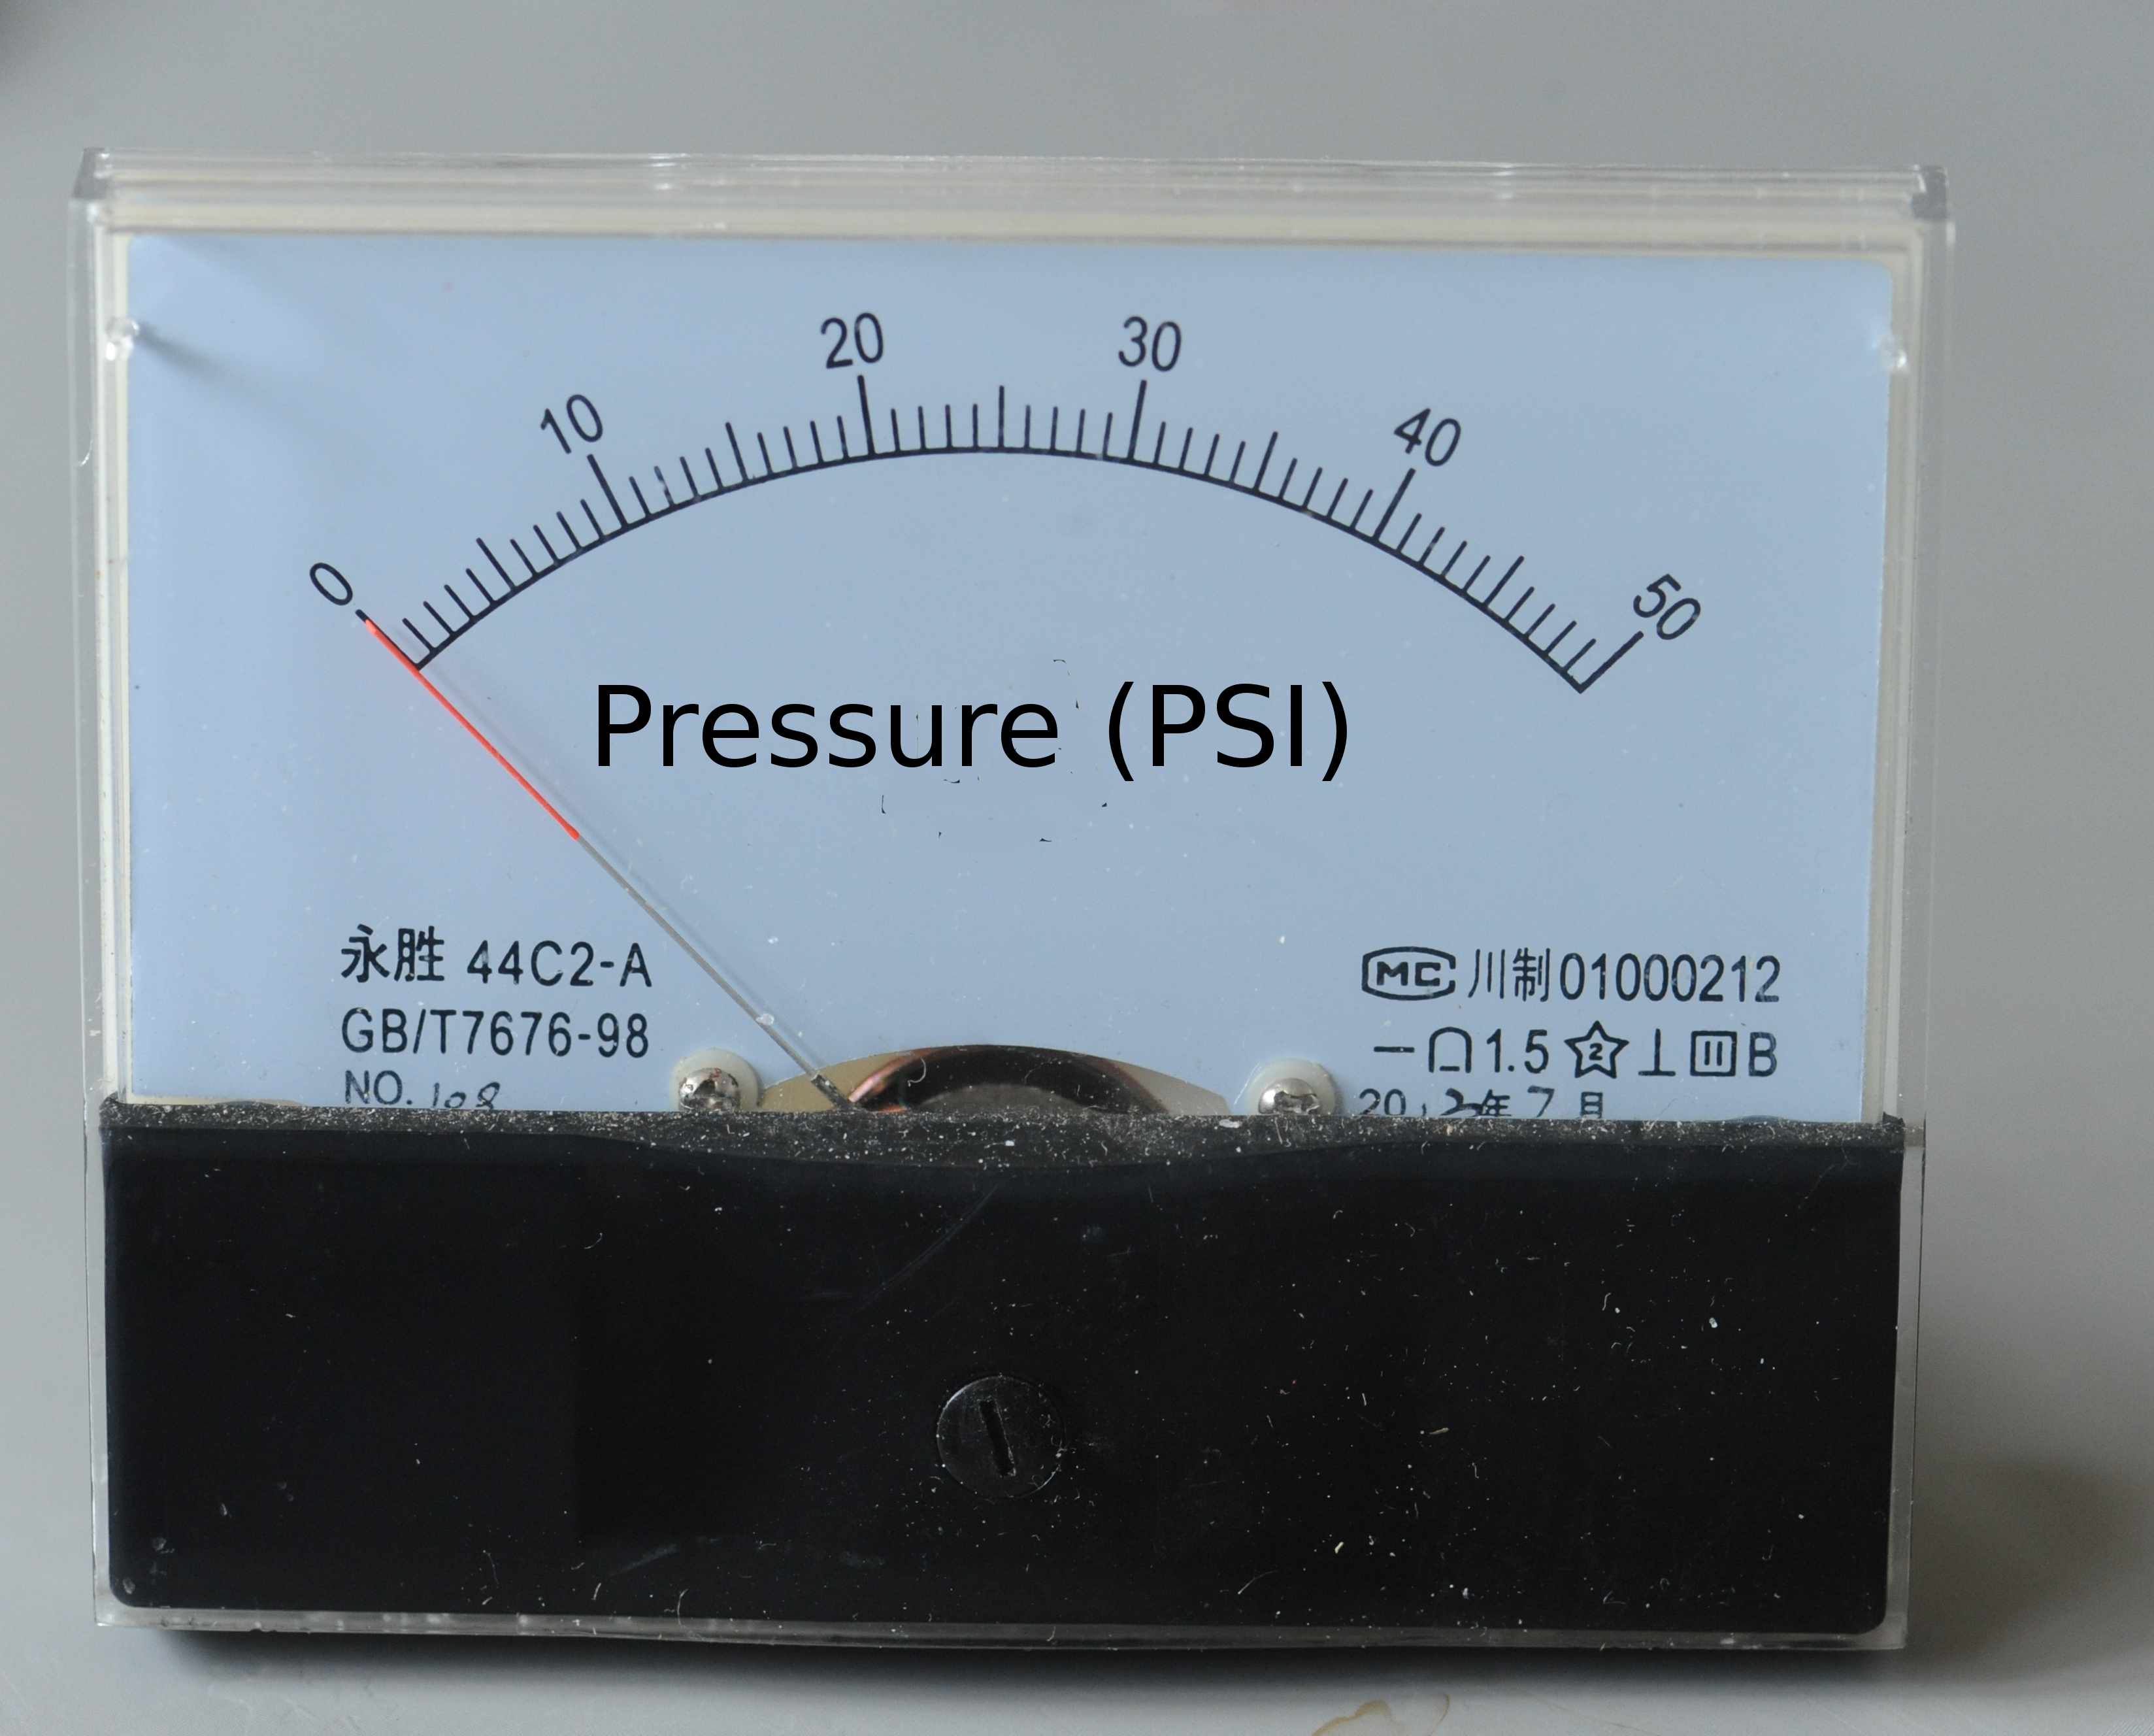 Meter shows 0-50 PSI